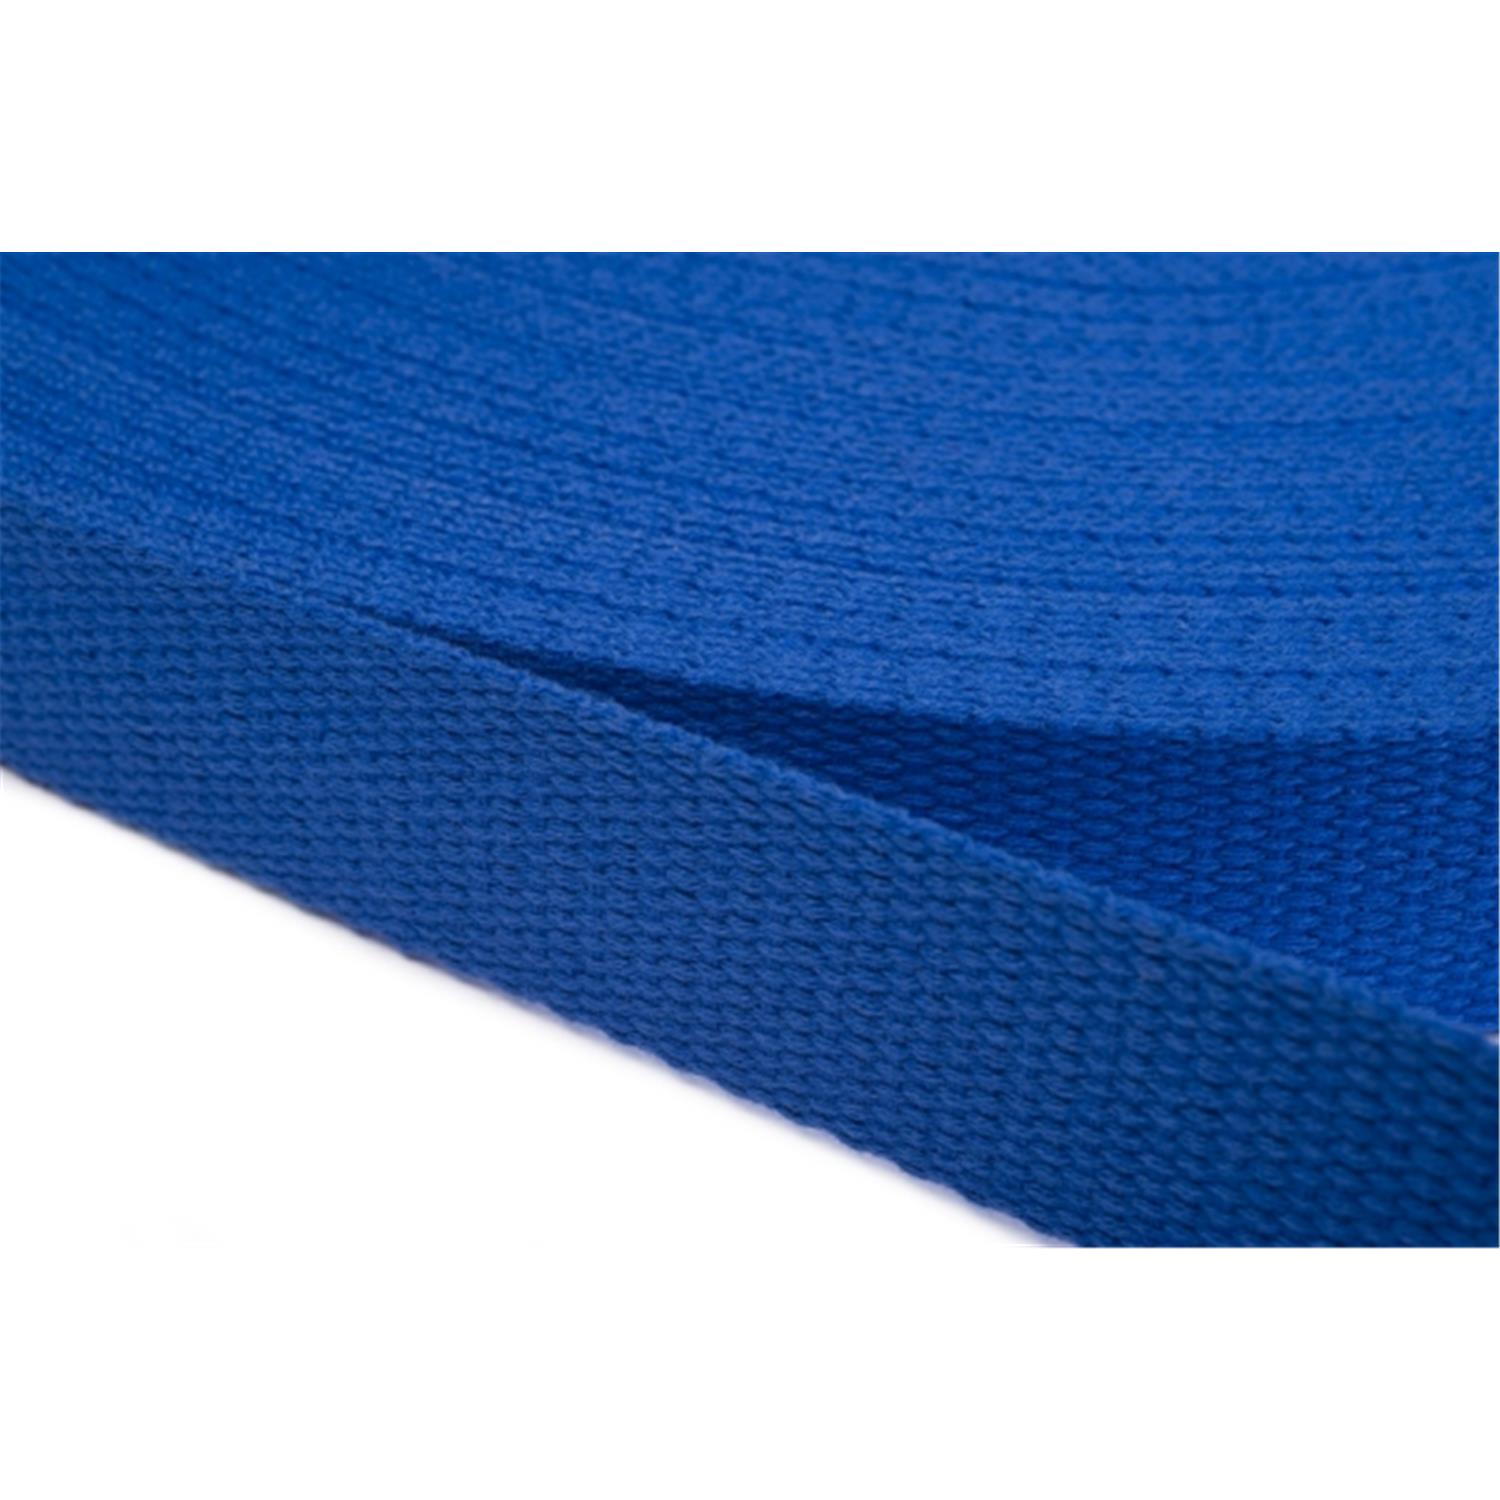 Gurtband aus Baumwolle 10mm in 20 Farben 12 - royalblau 6 Meter